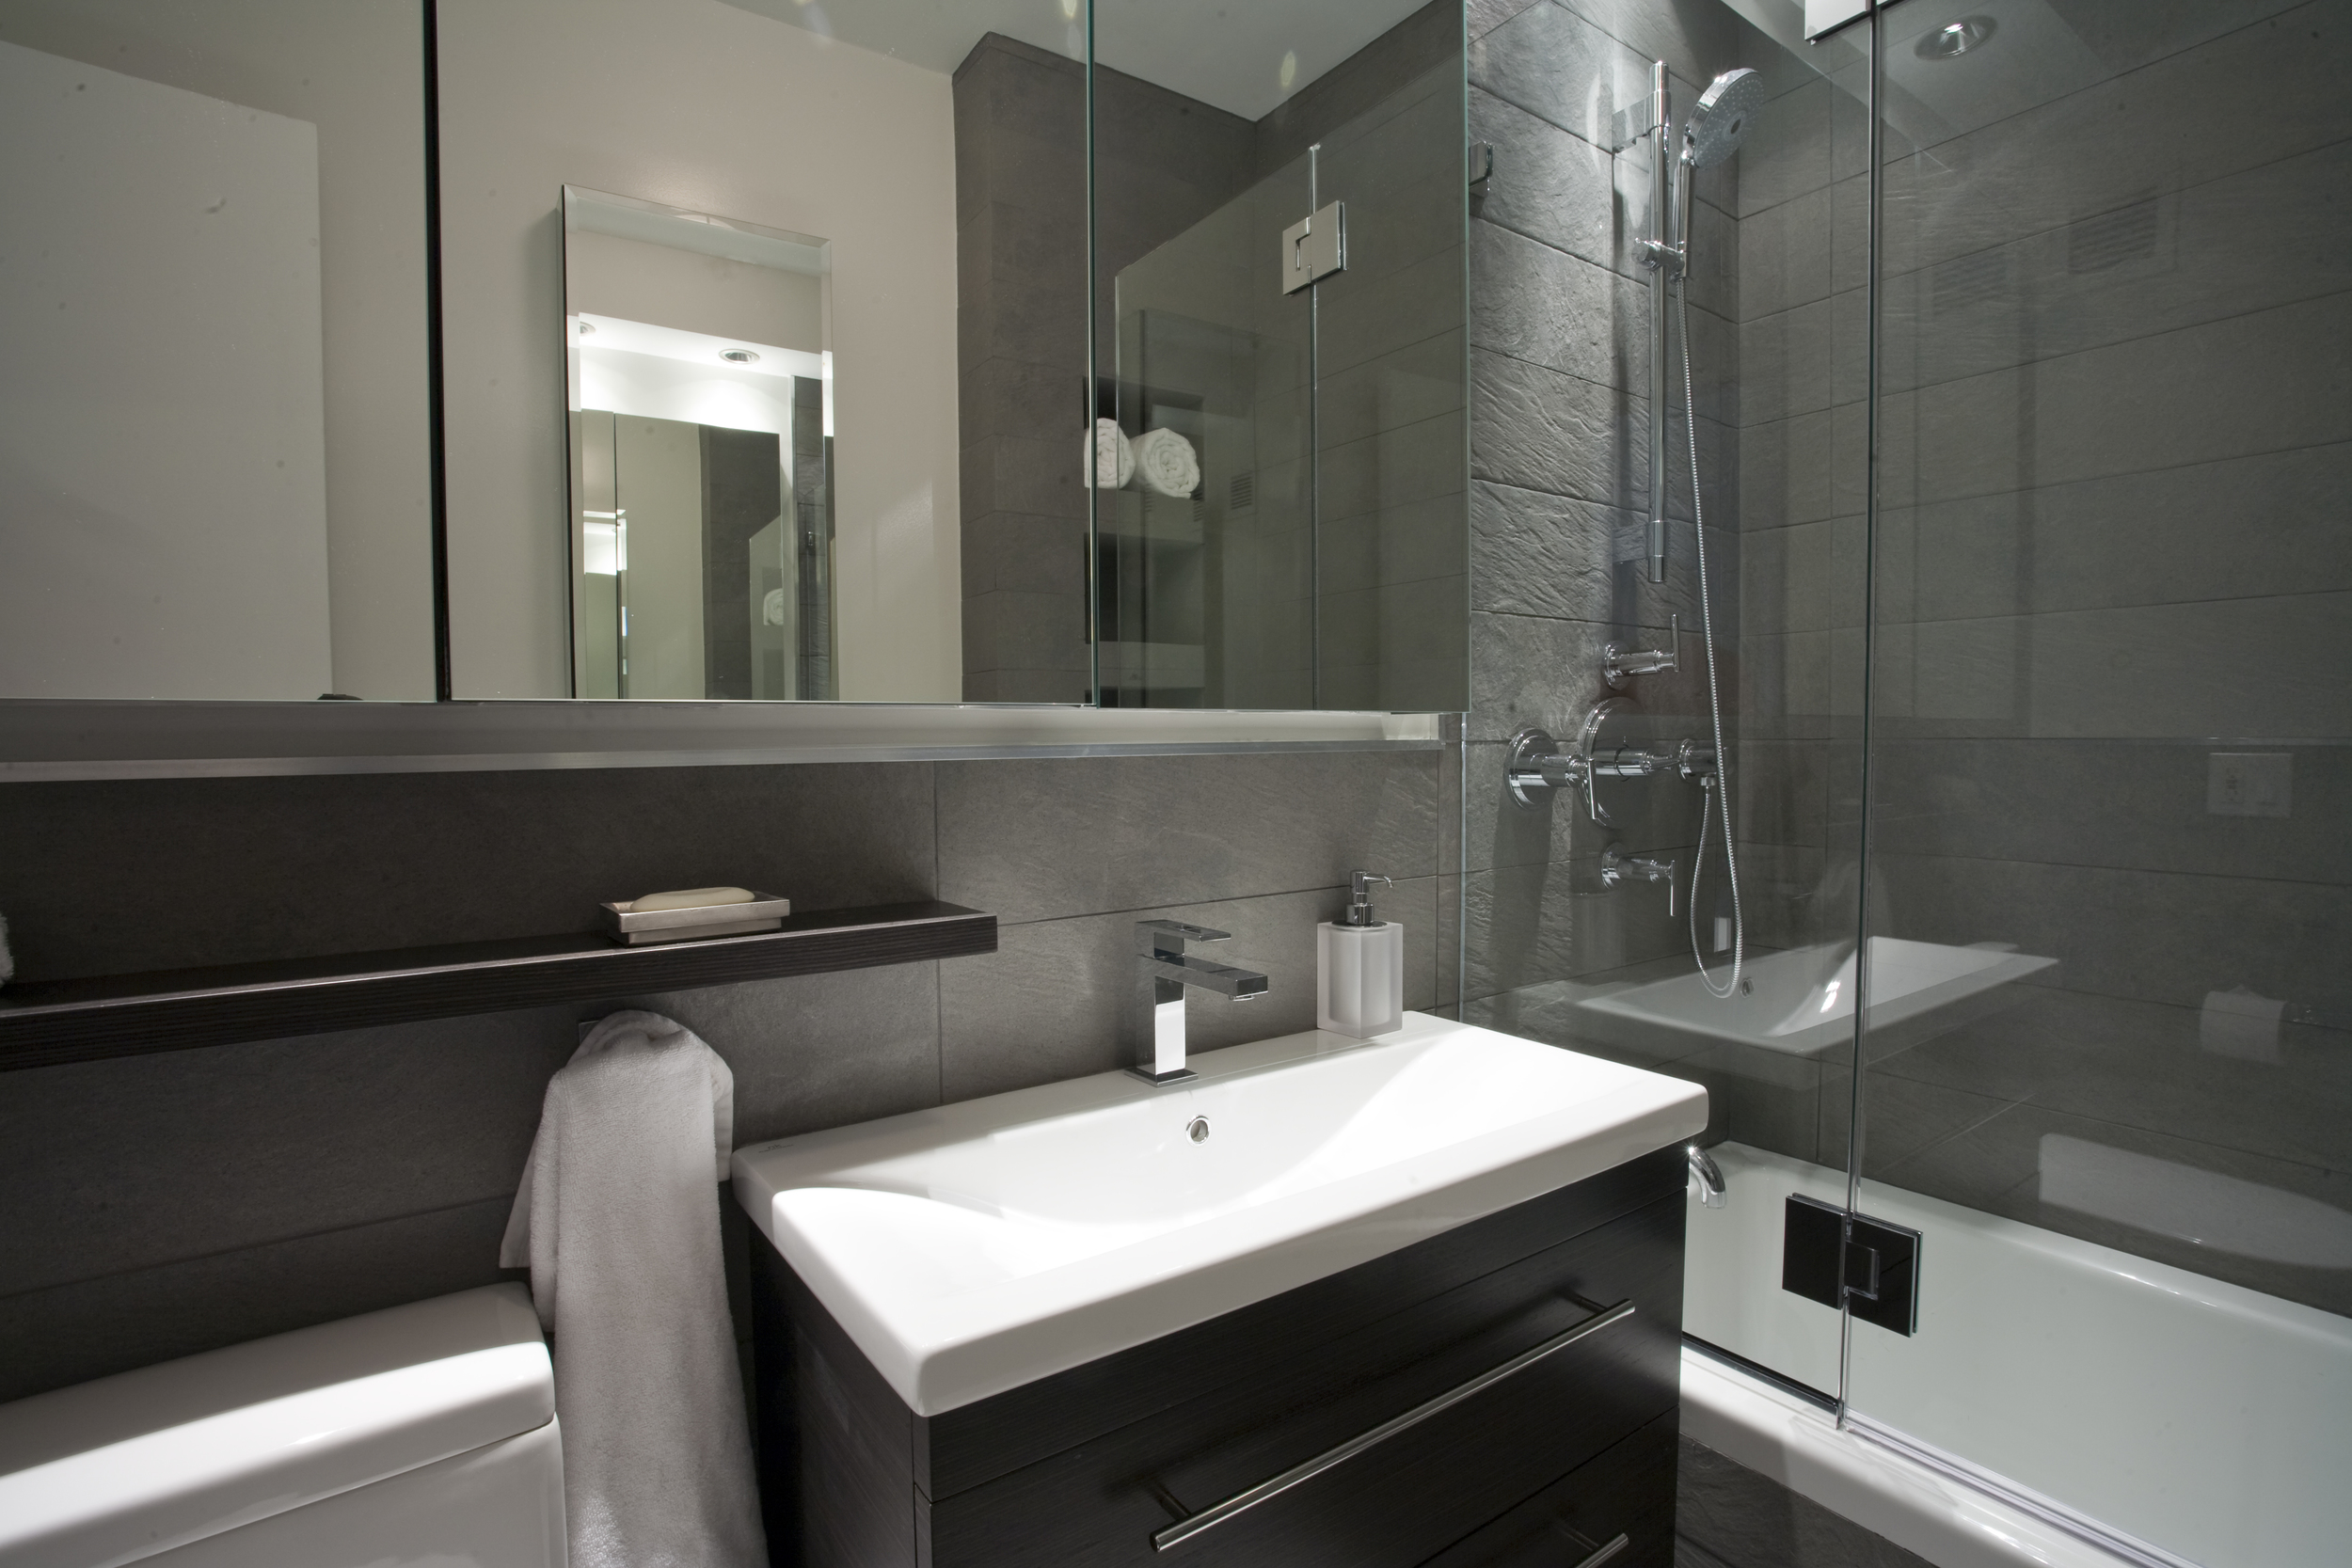 small-bathroom-renovations-5-small-bathroom-remodel-ideas-4368-x-2912.jpg